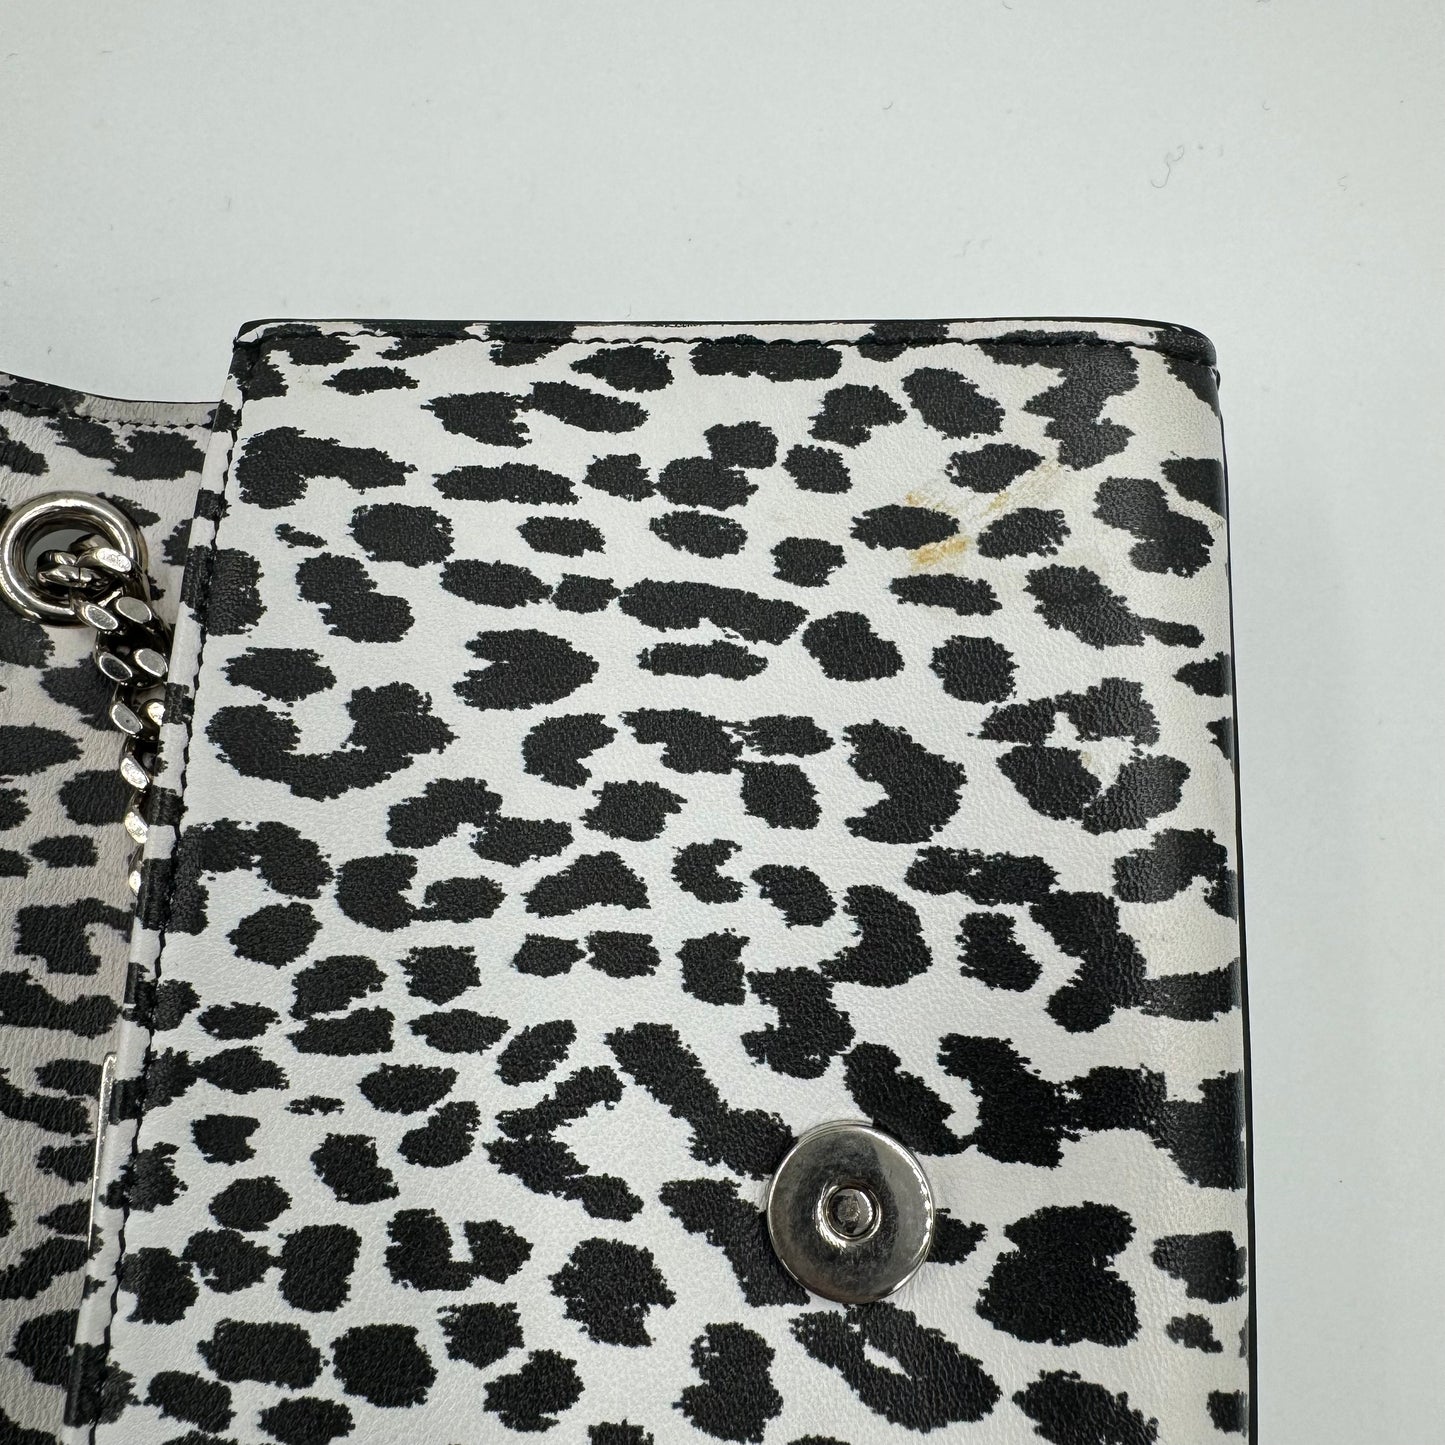 YVES SAINT LAURENT White Leopard Print Leather Small Kate Bag